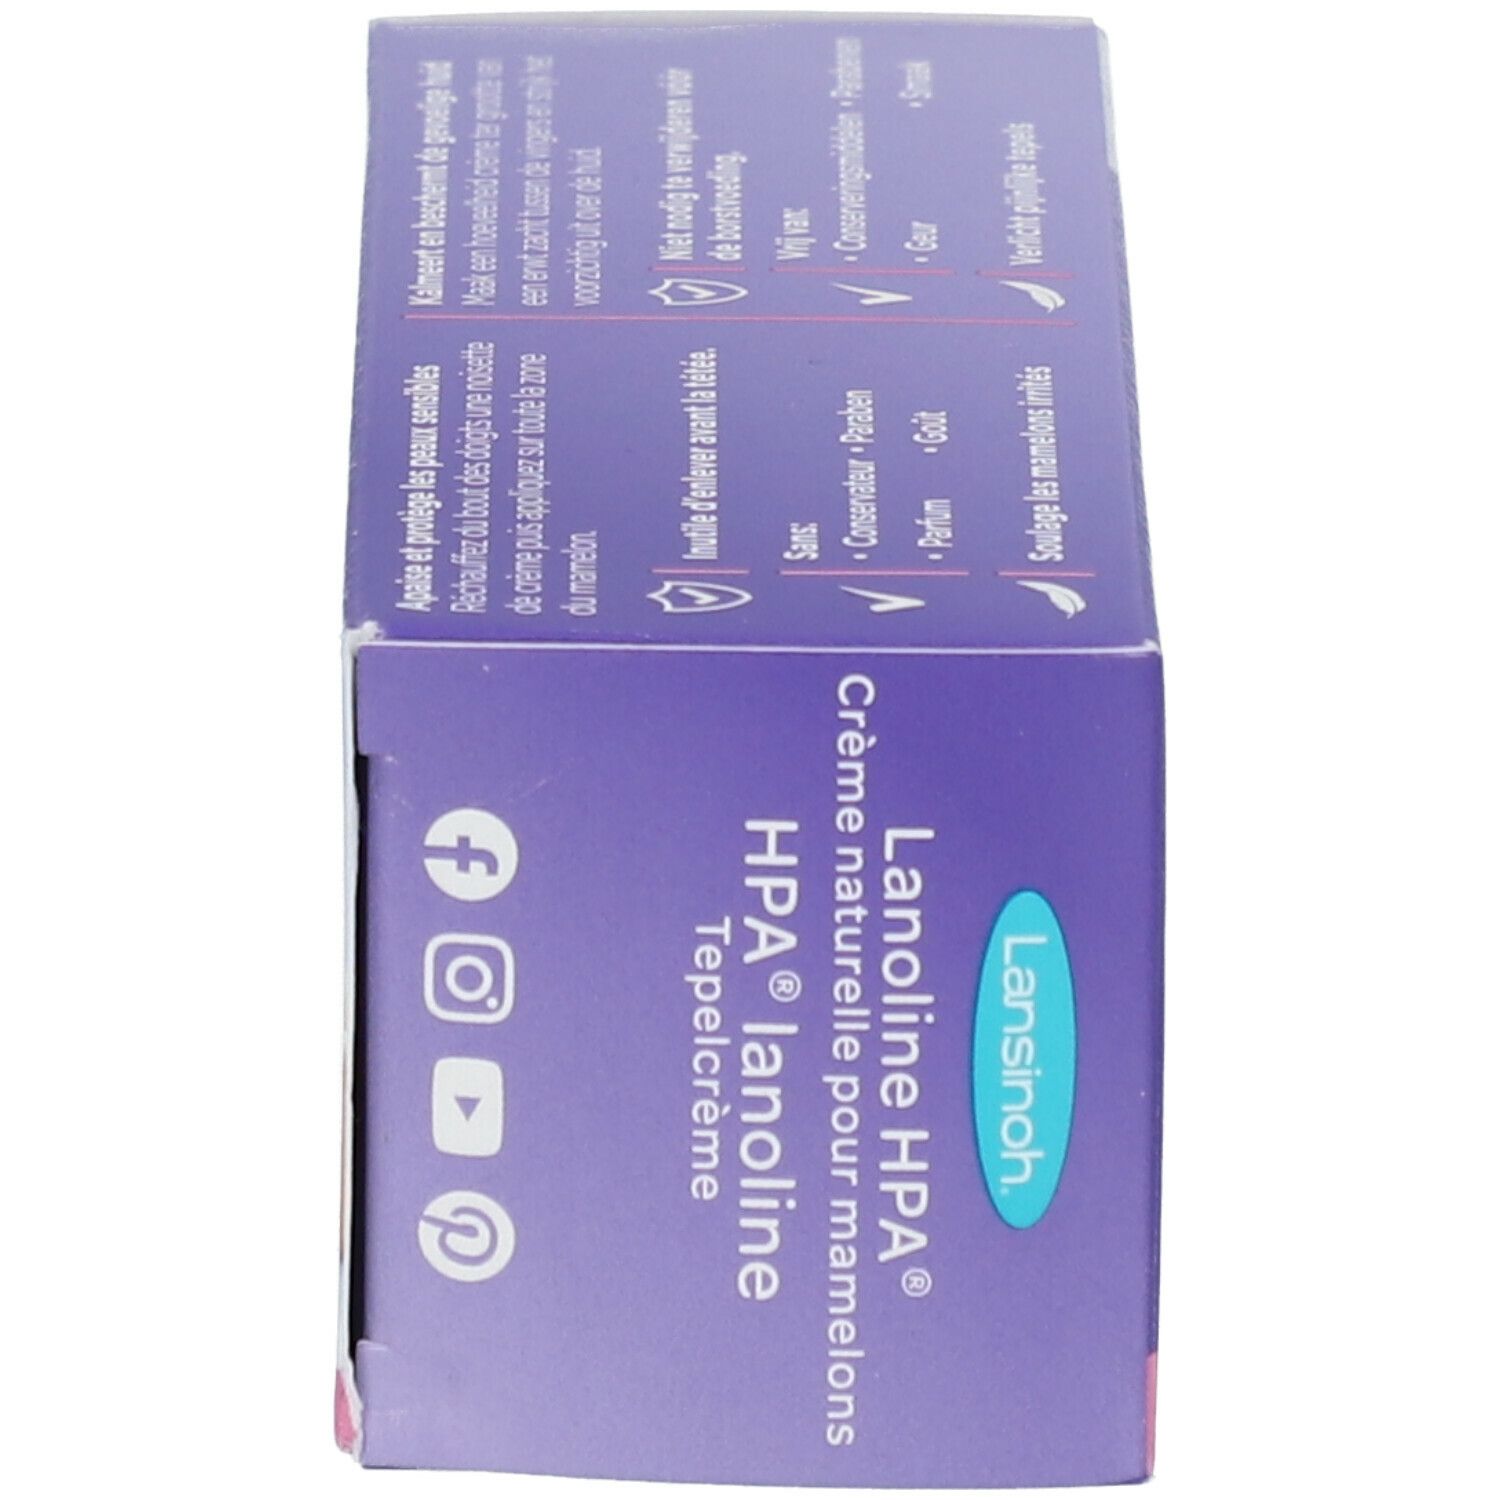 LANSINOH Crème HPA® Lanoline crème protectrice allaitement tube 40ml -  Parapharmacie Prado Mermoz